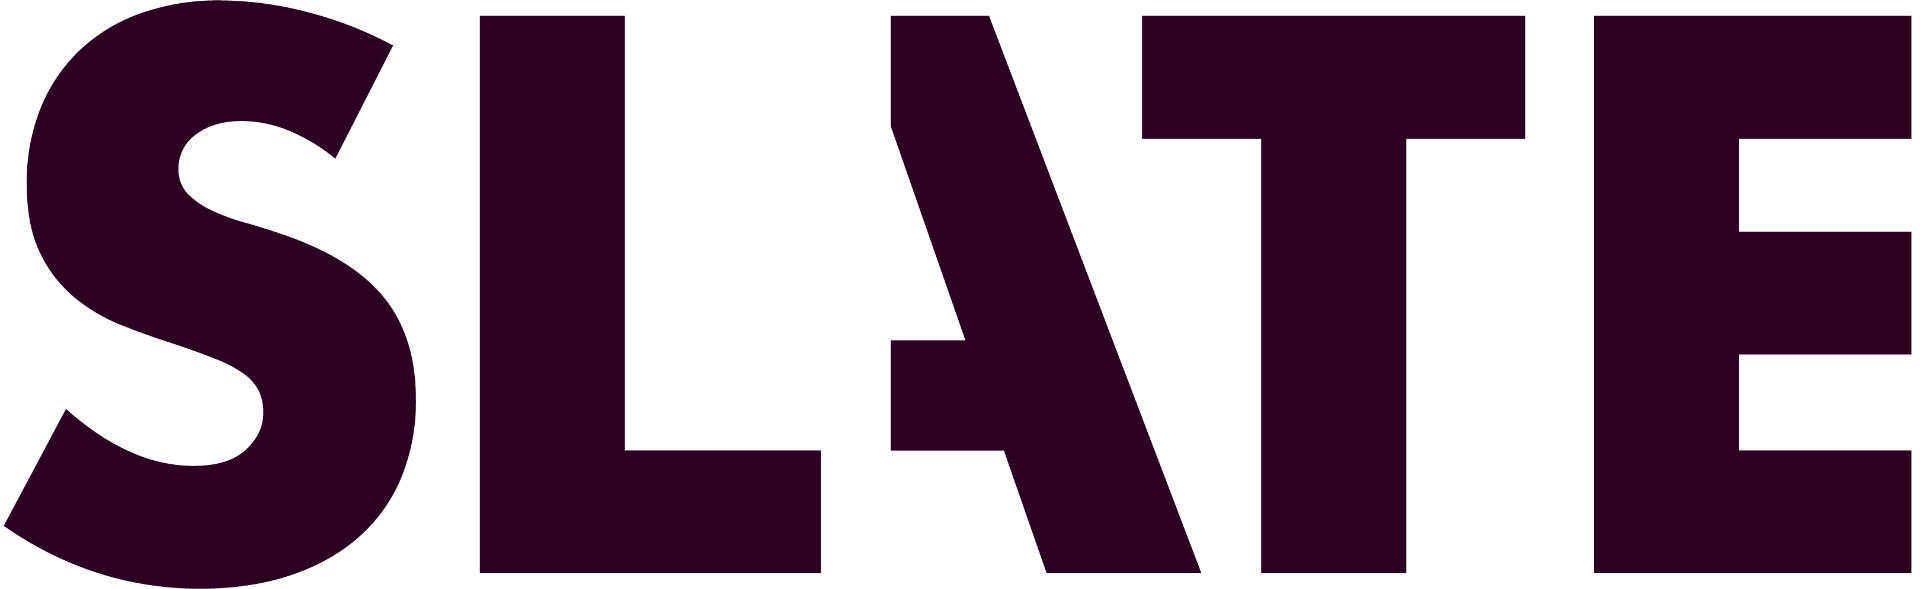 Slate logo. 